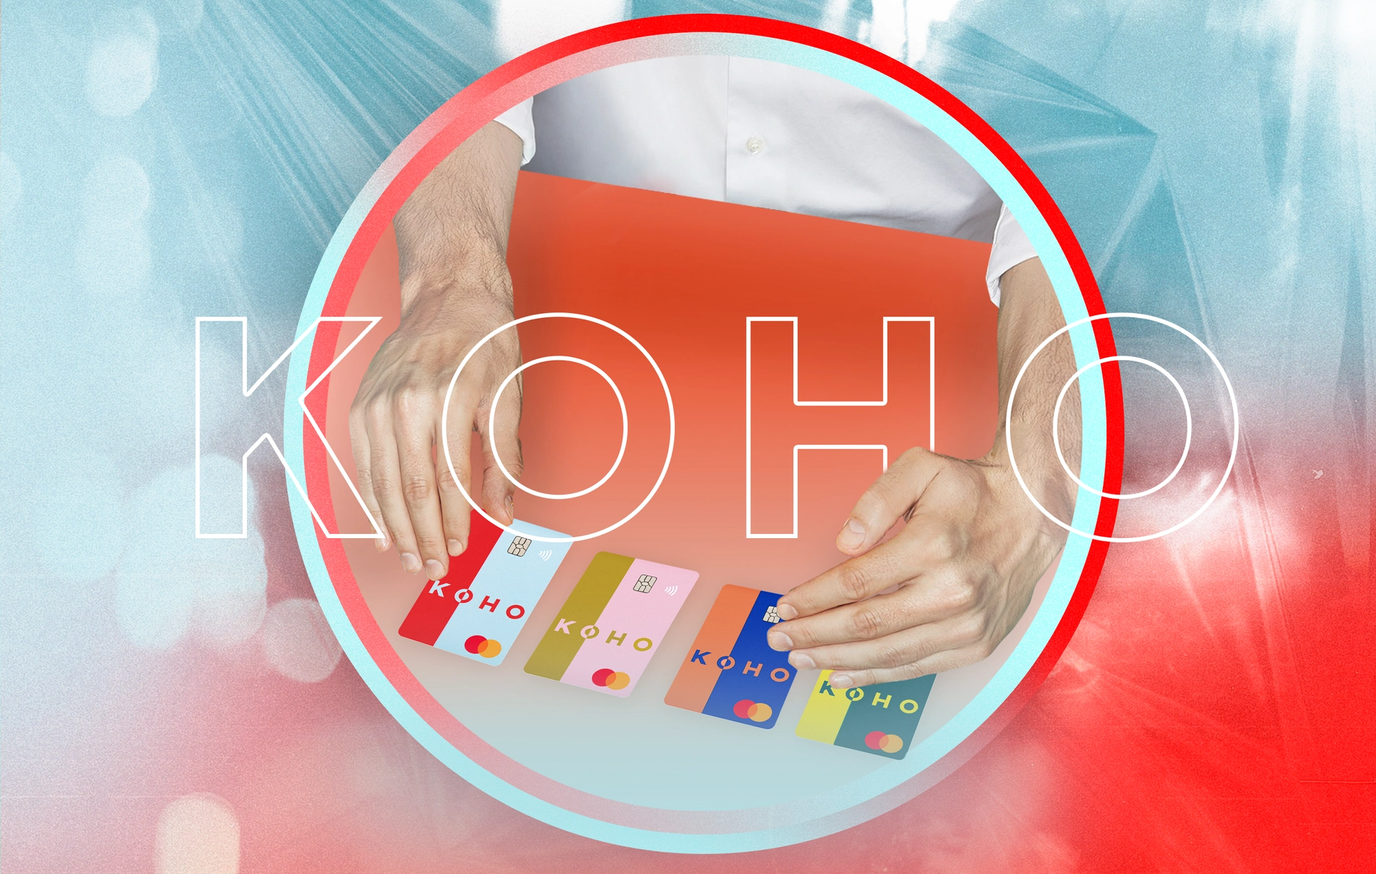 How Does KOHO Make Money?